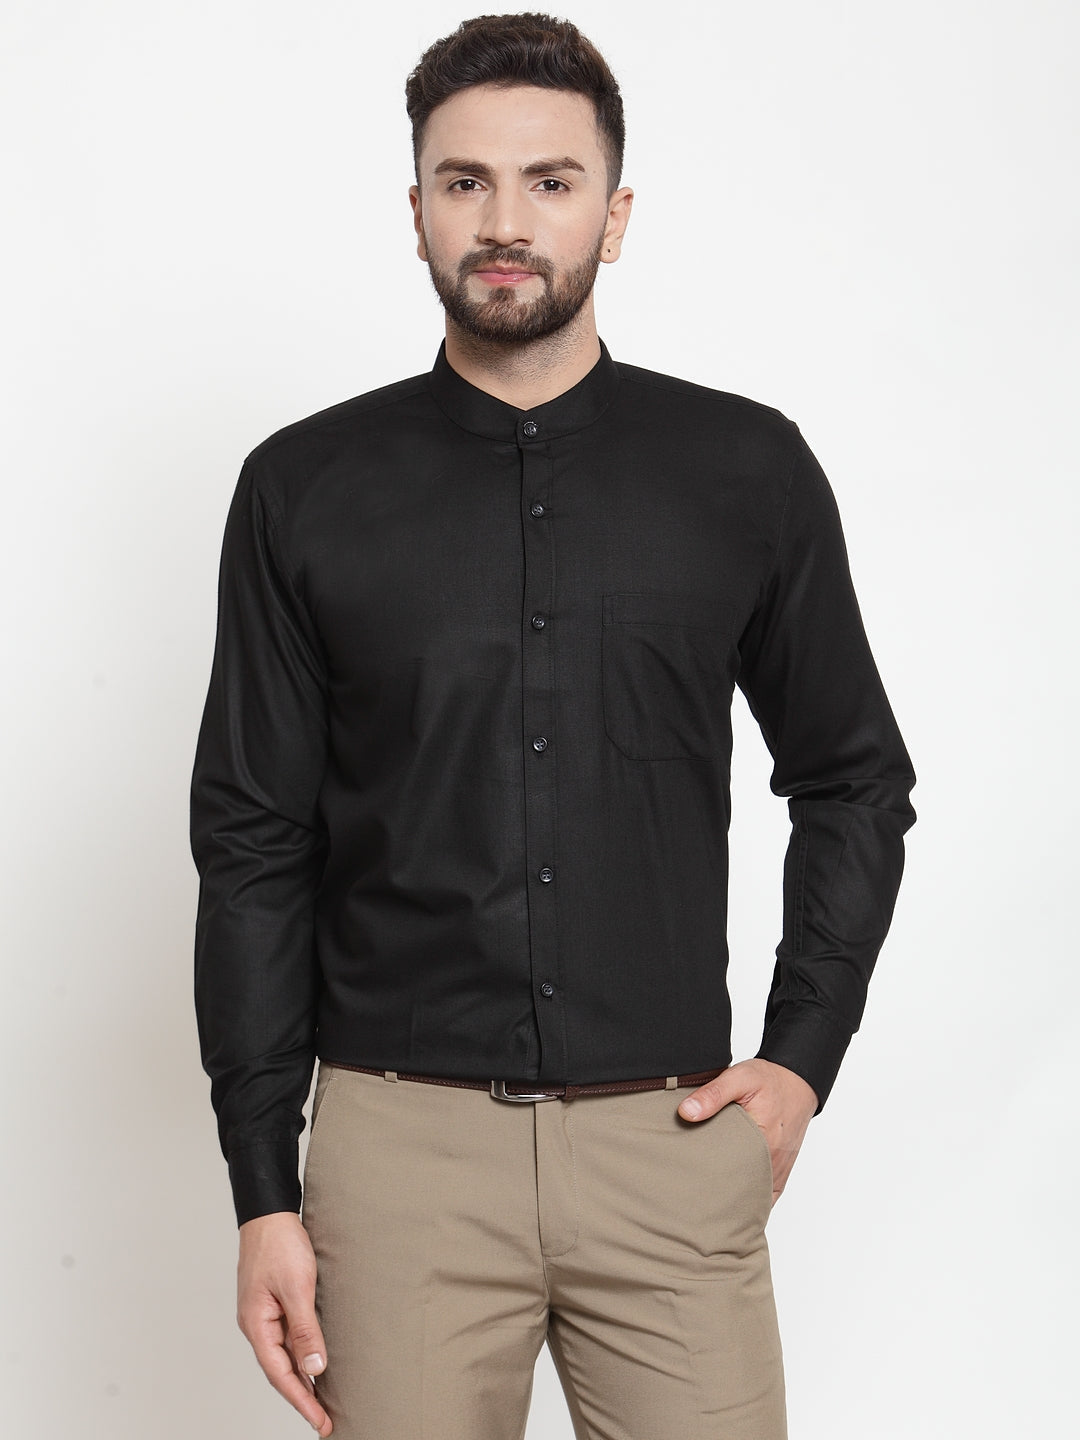 Men's Black Cotton Solid Mandarin Collar Formal Shirts ( SF 726Black ) - Jainish